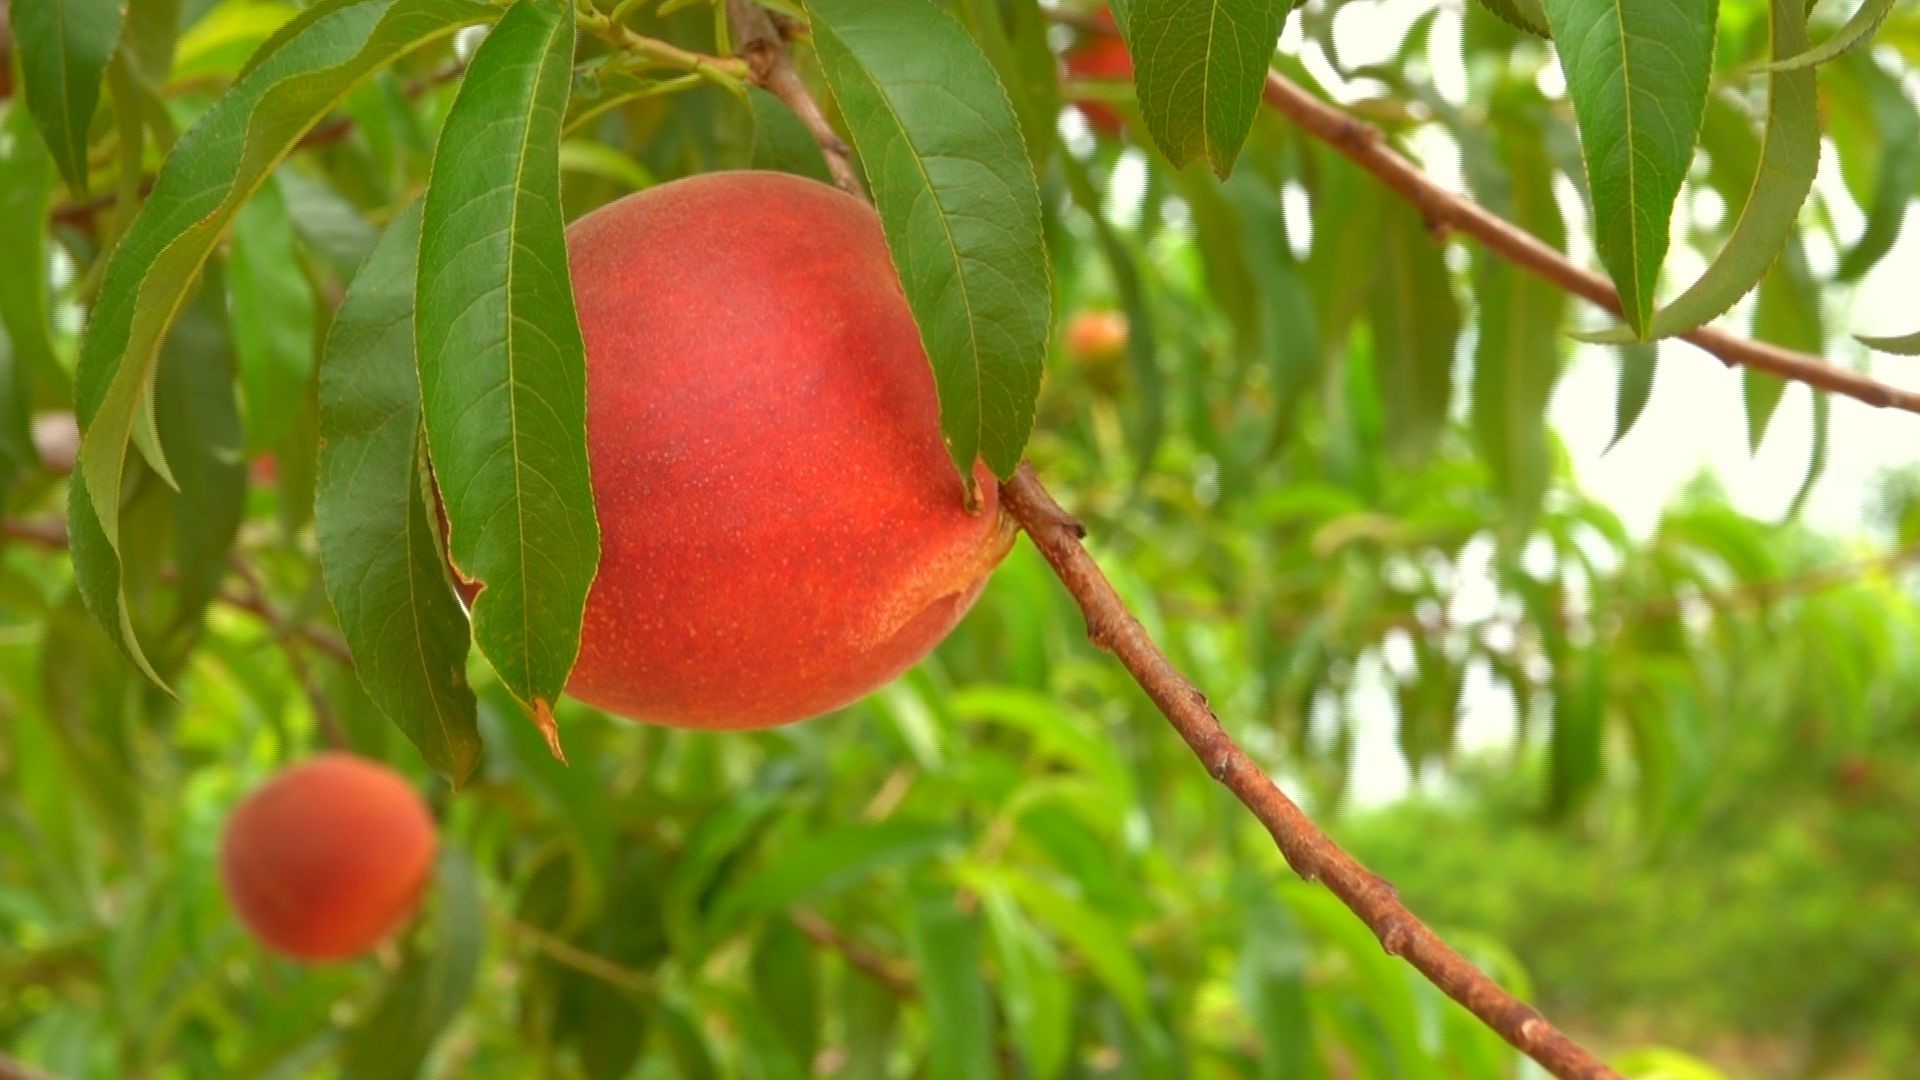 It's peach season and where better to find peaches than Peach County?